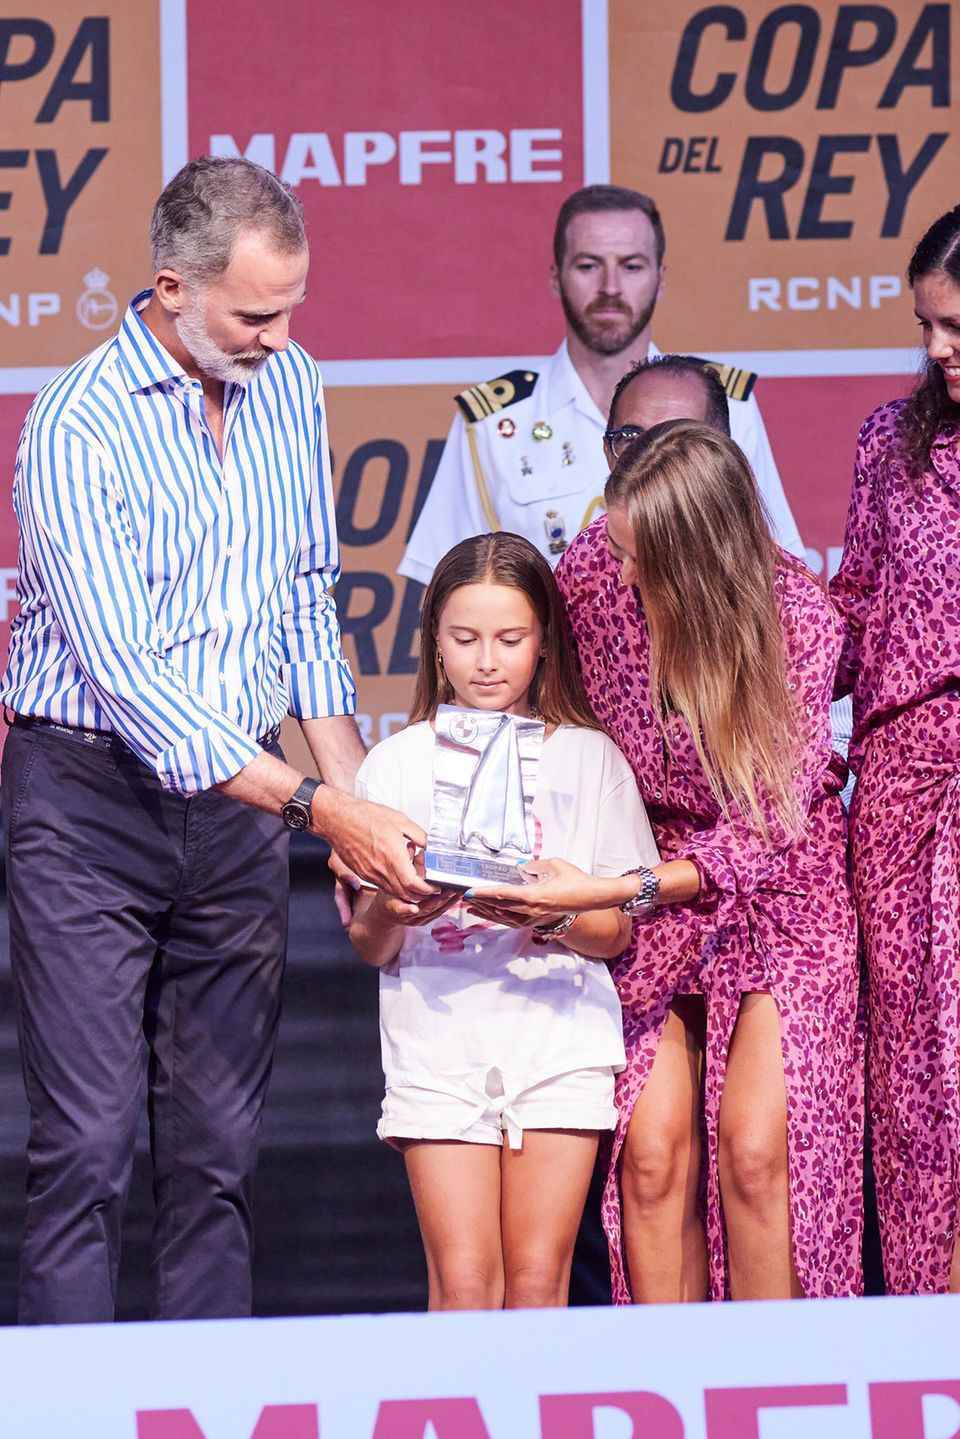 King Felipe at the award ceremony of the 40th sailing regatta "Copa del Rey Mapfre" at the Ses Voltes event center in the Parc de la Mar park in Palma de Mallorca on August 6, 2022.